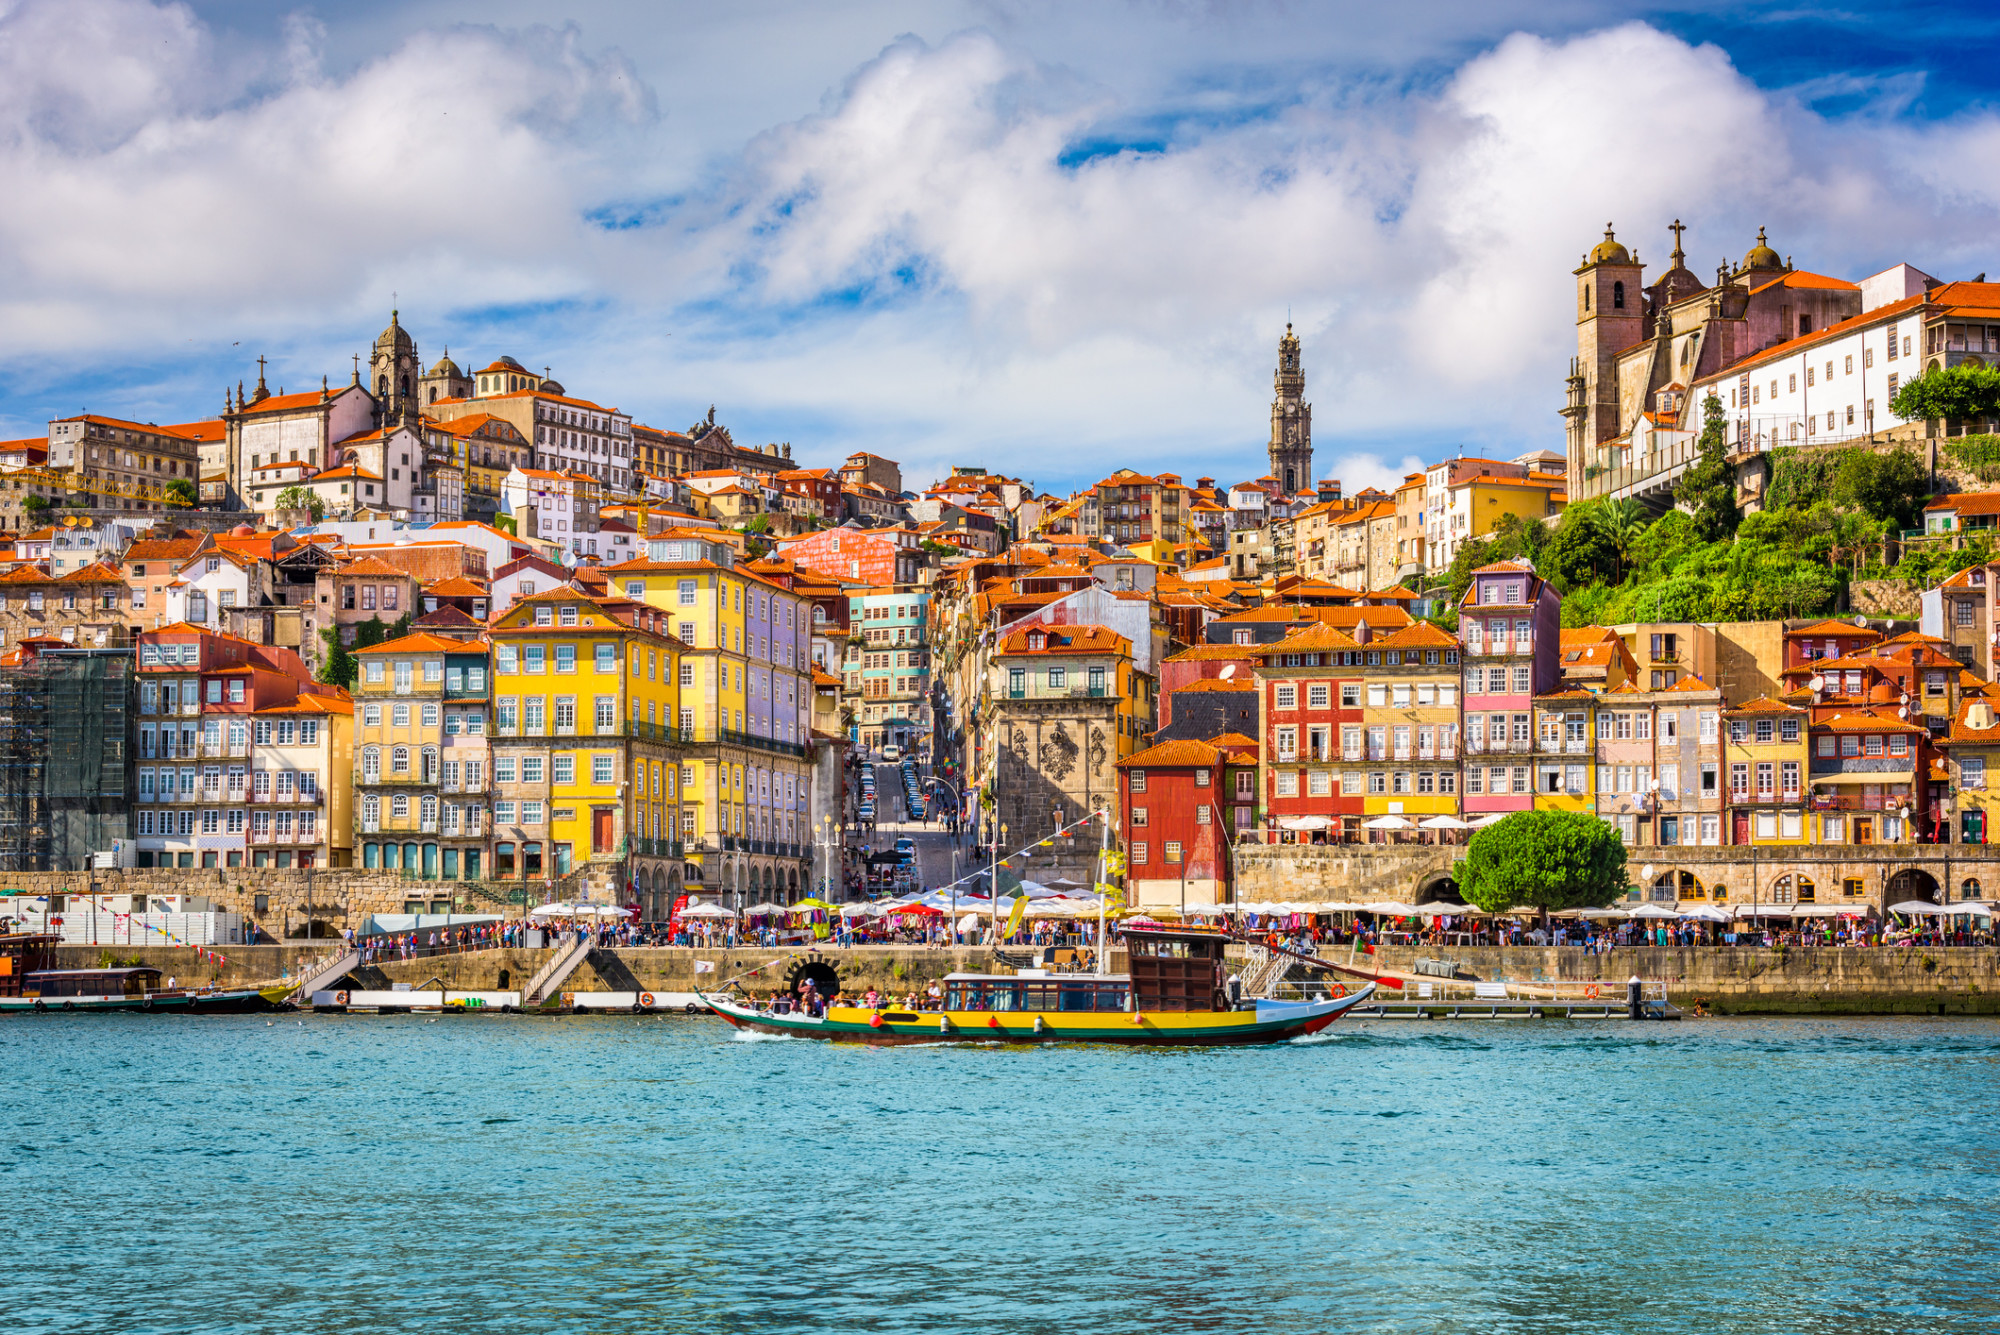 Areas To Avoid in Porto & Other Travel Tips, porto 